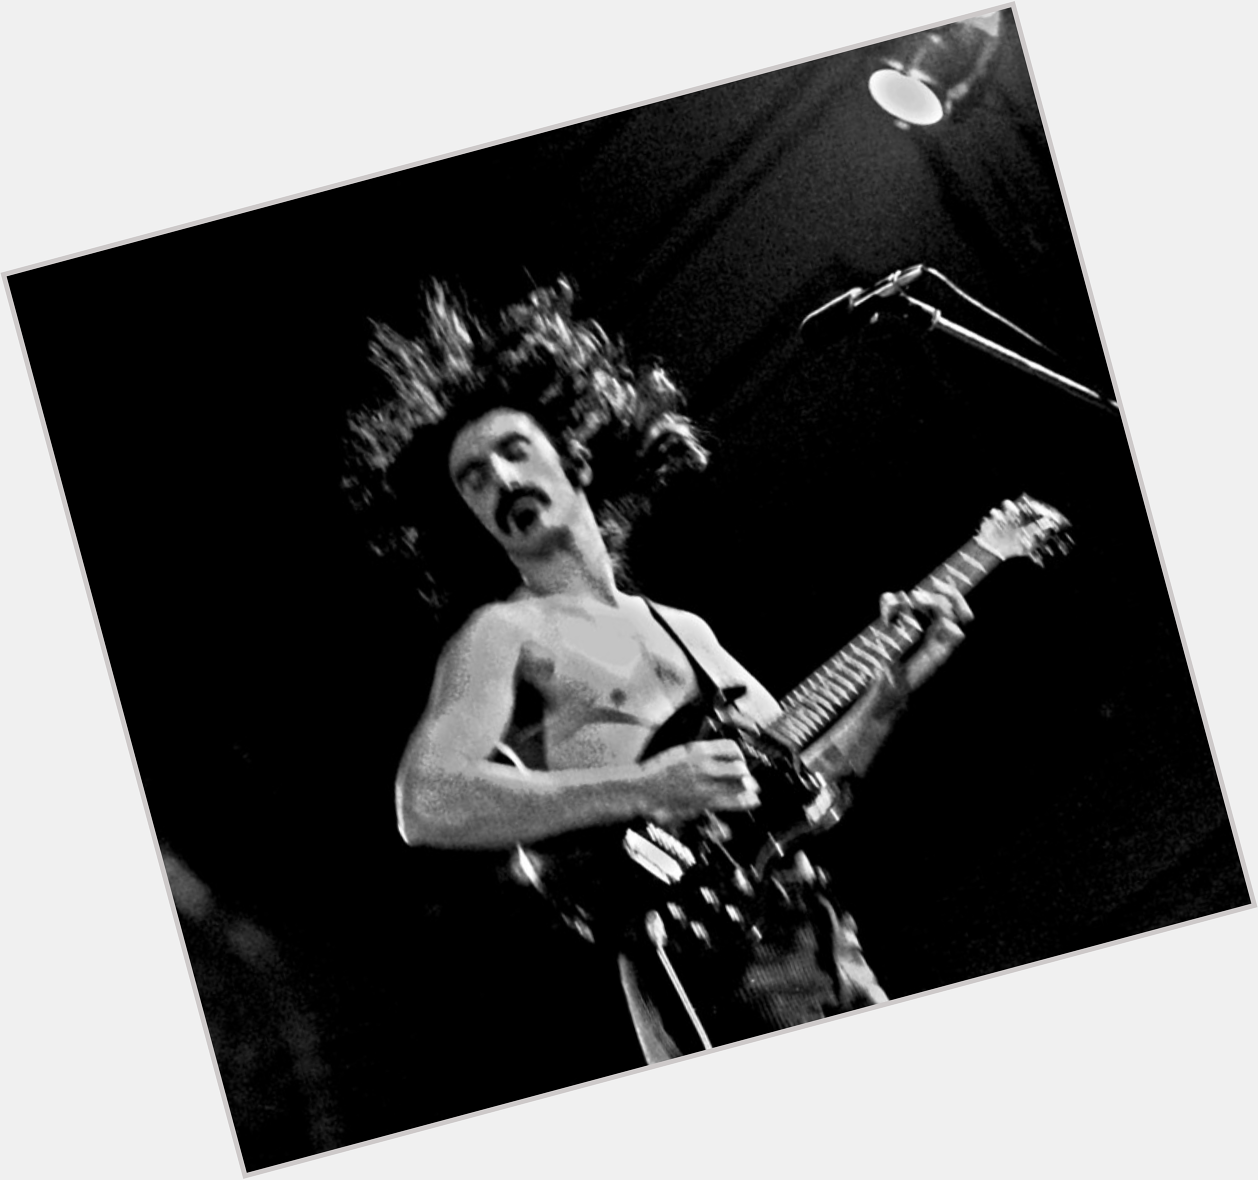 Happy belated birthday to Frank Zappa. Who saw the new documentary about him by Alex ? 